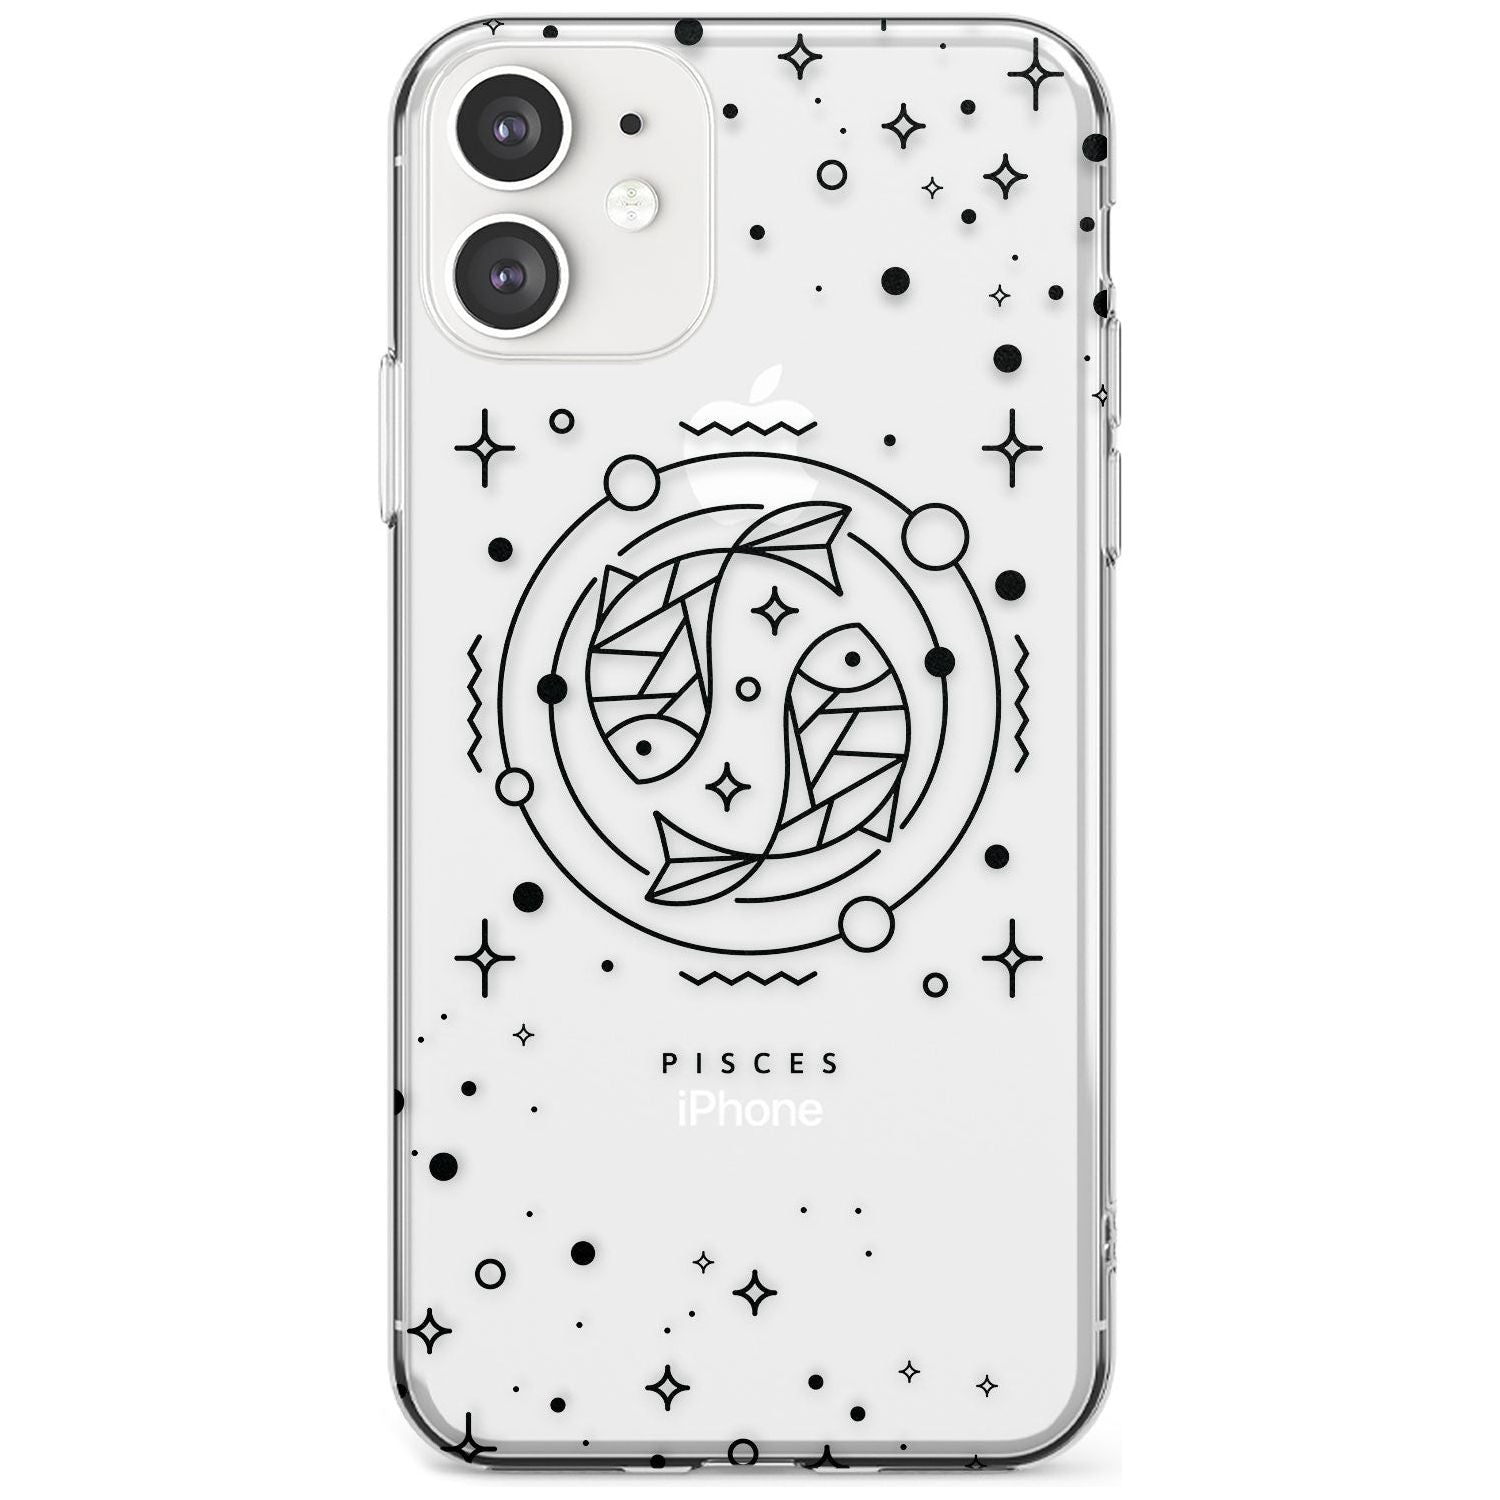 Pisces Emblem - Transparent Design Slim TPU Phone Case for iPhone 11